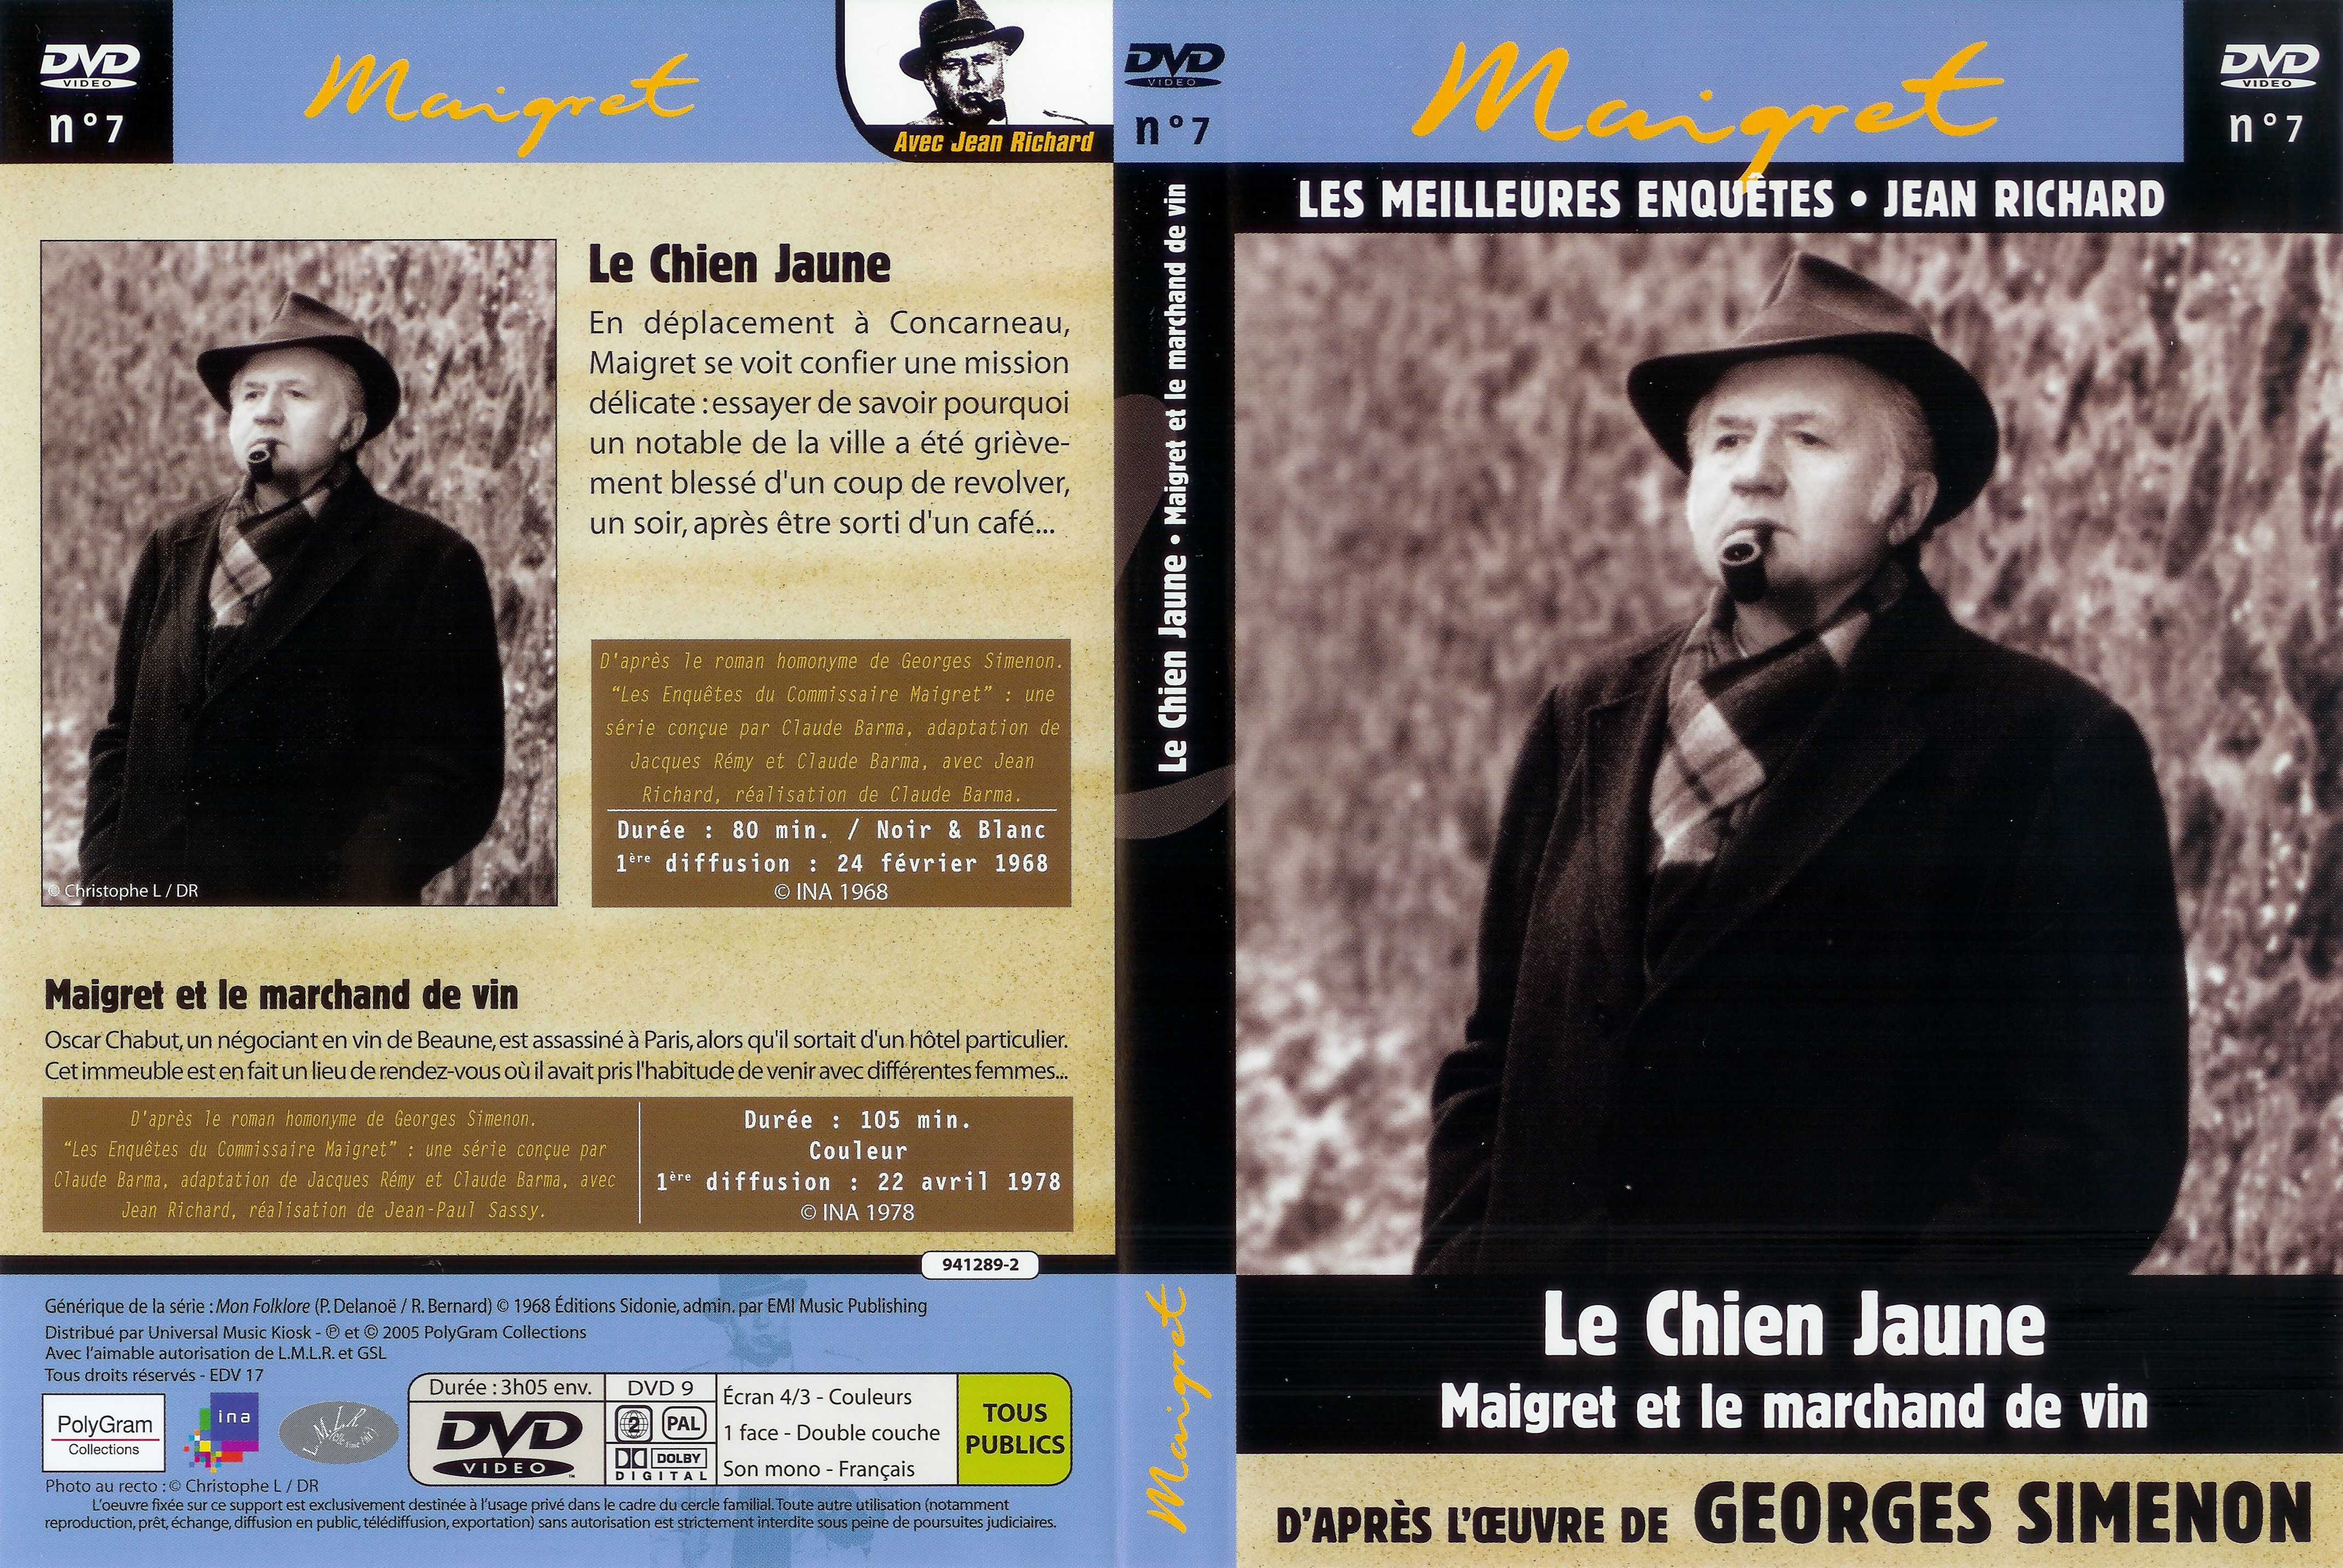 Jaquette DVD Maigret (Jean Richard) vol 07